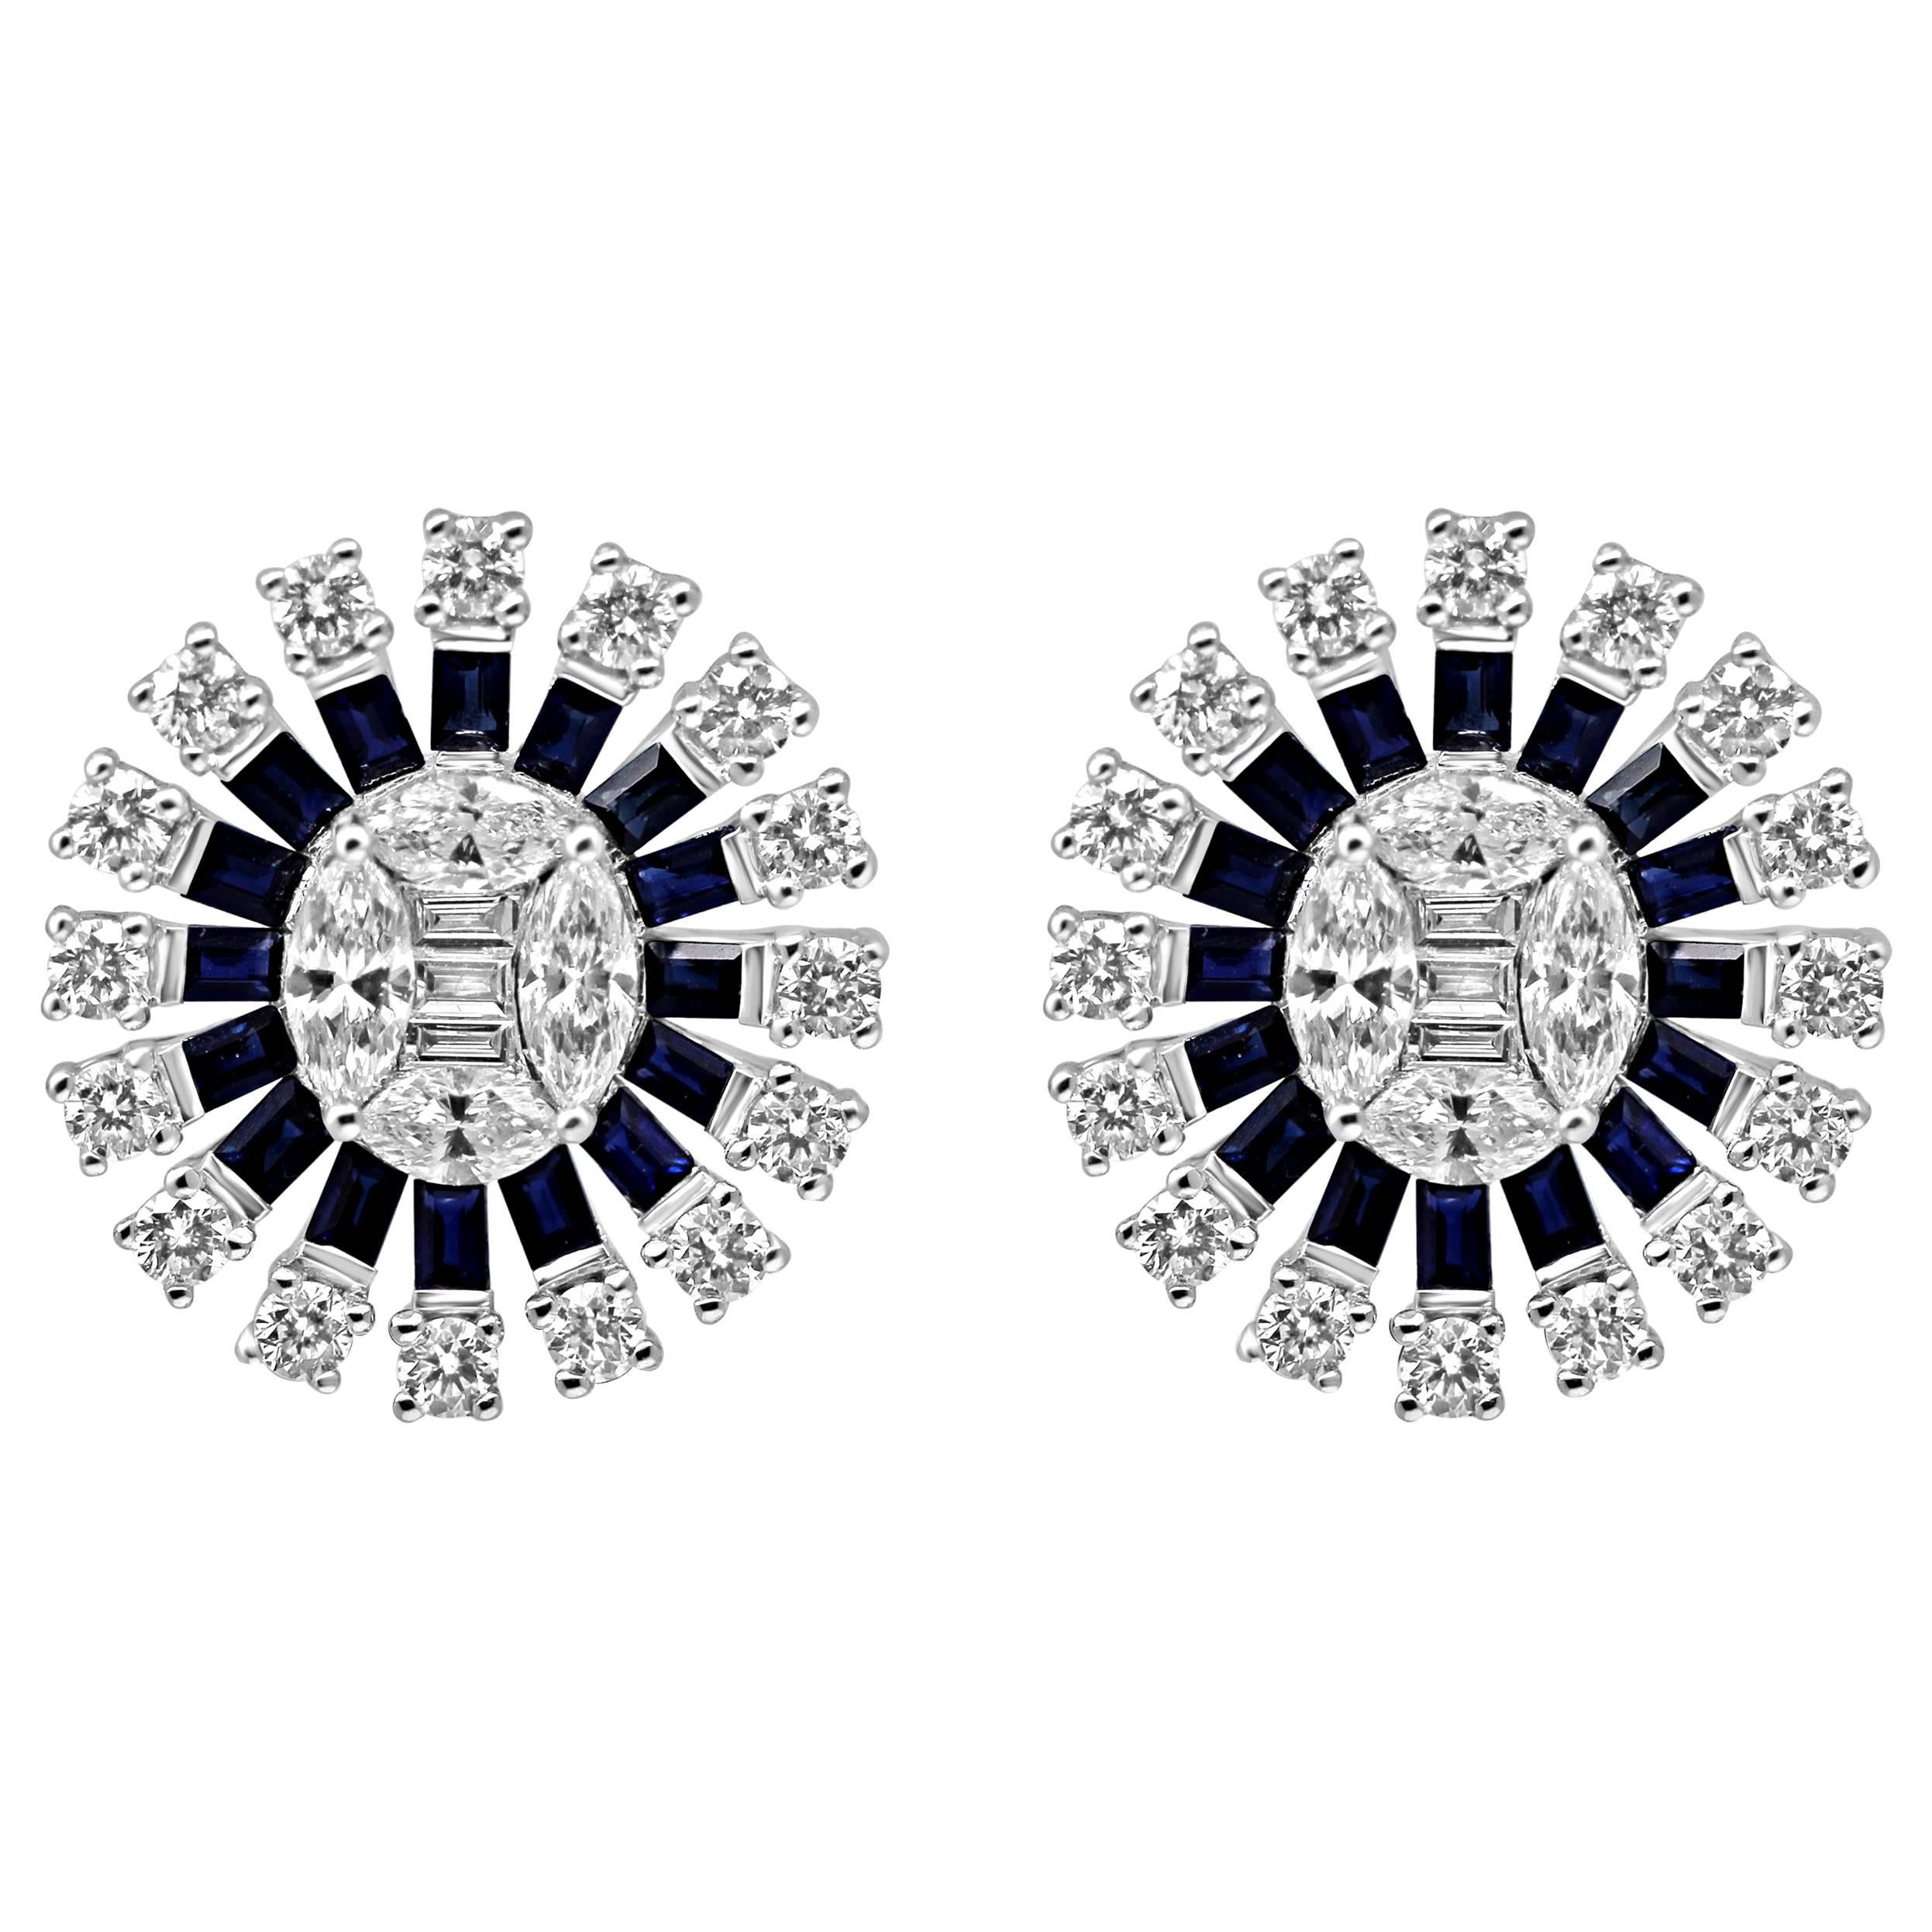 18 Karat Gold Oval Cluster Push-Back Earrings Diamond and Sapphire Gemstones